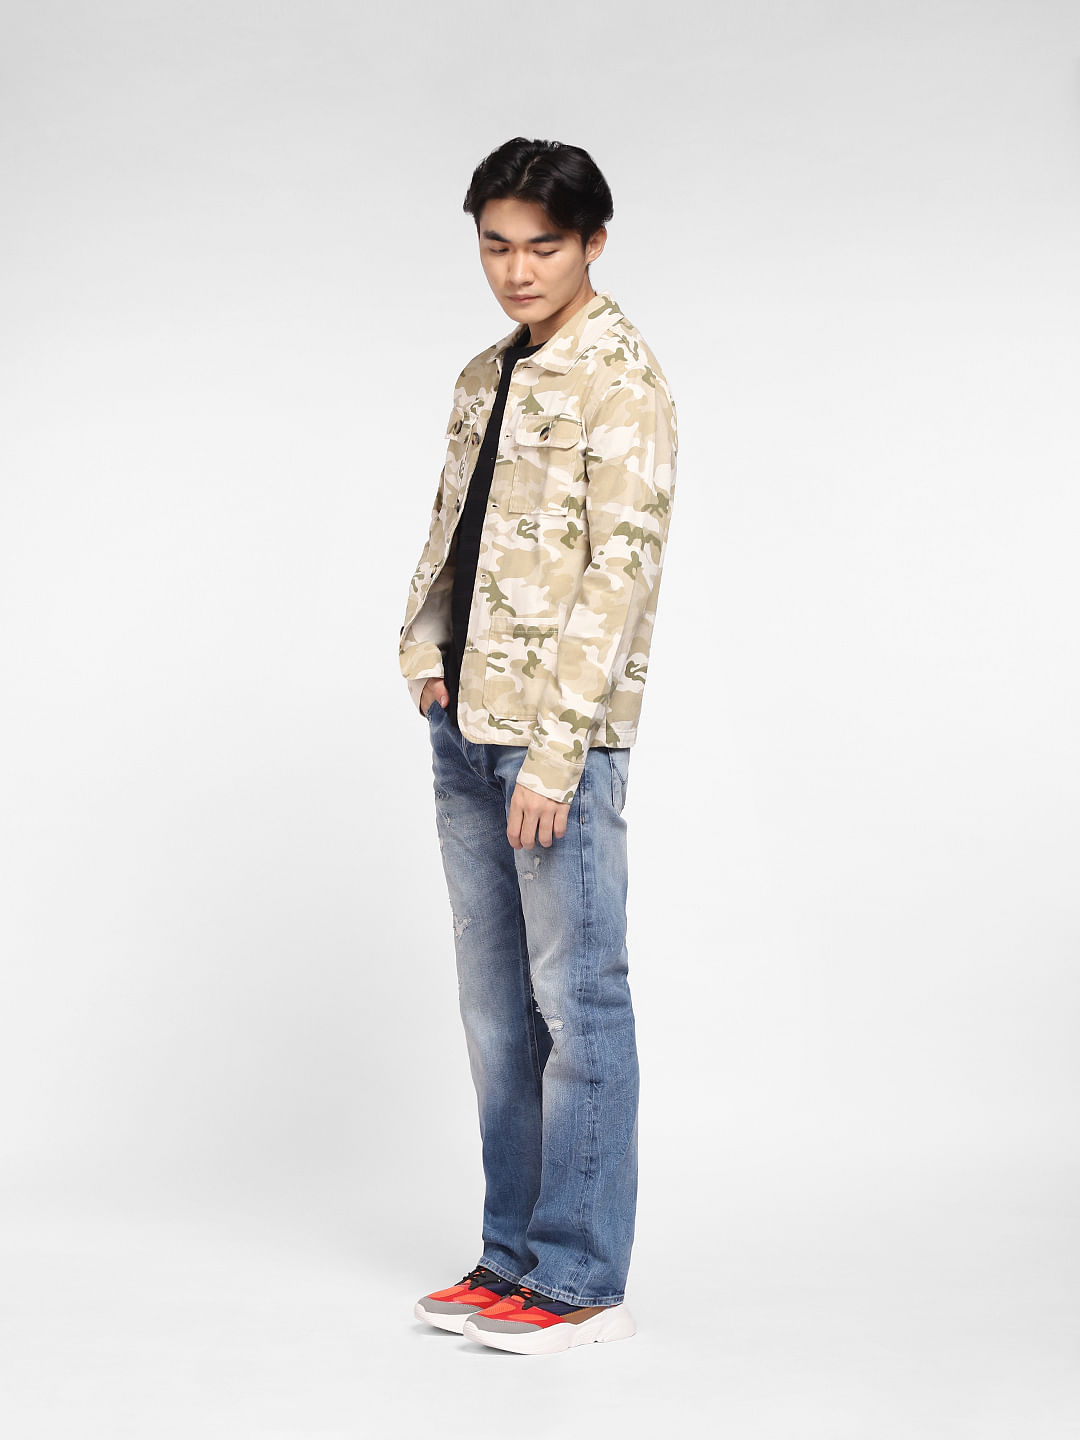 Buy BaronHong Men's Slim Fit Military US Army Camouflage Denim Jacket(armygreen,4XL)  at Amazon.in